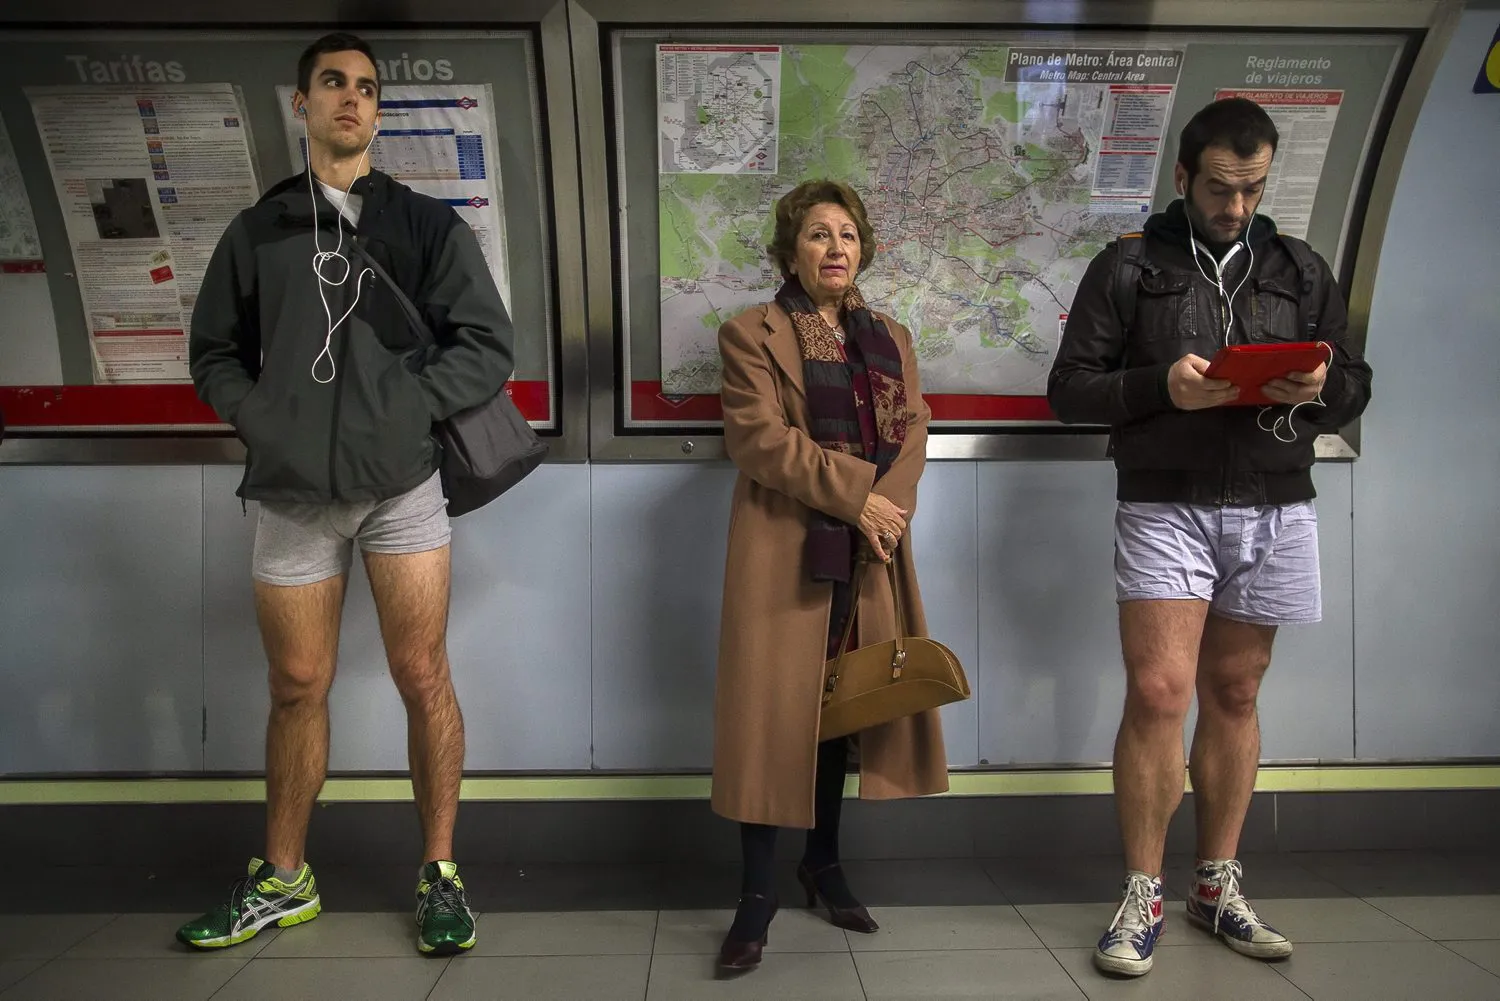 Книга продавец без штанов. No Pants Subway Ride 2014. Джон Туртурро без штанов в трансформерах. В метро без штанов. Остался без штанов.